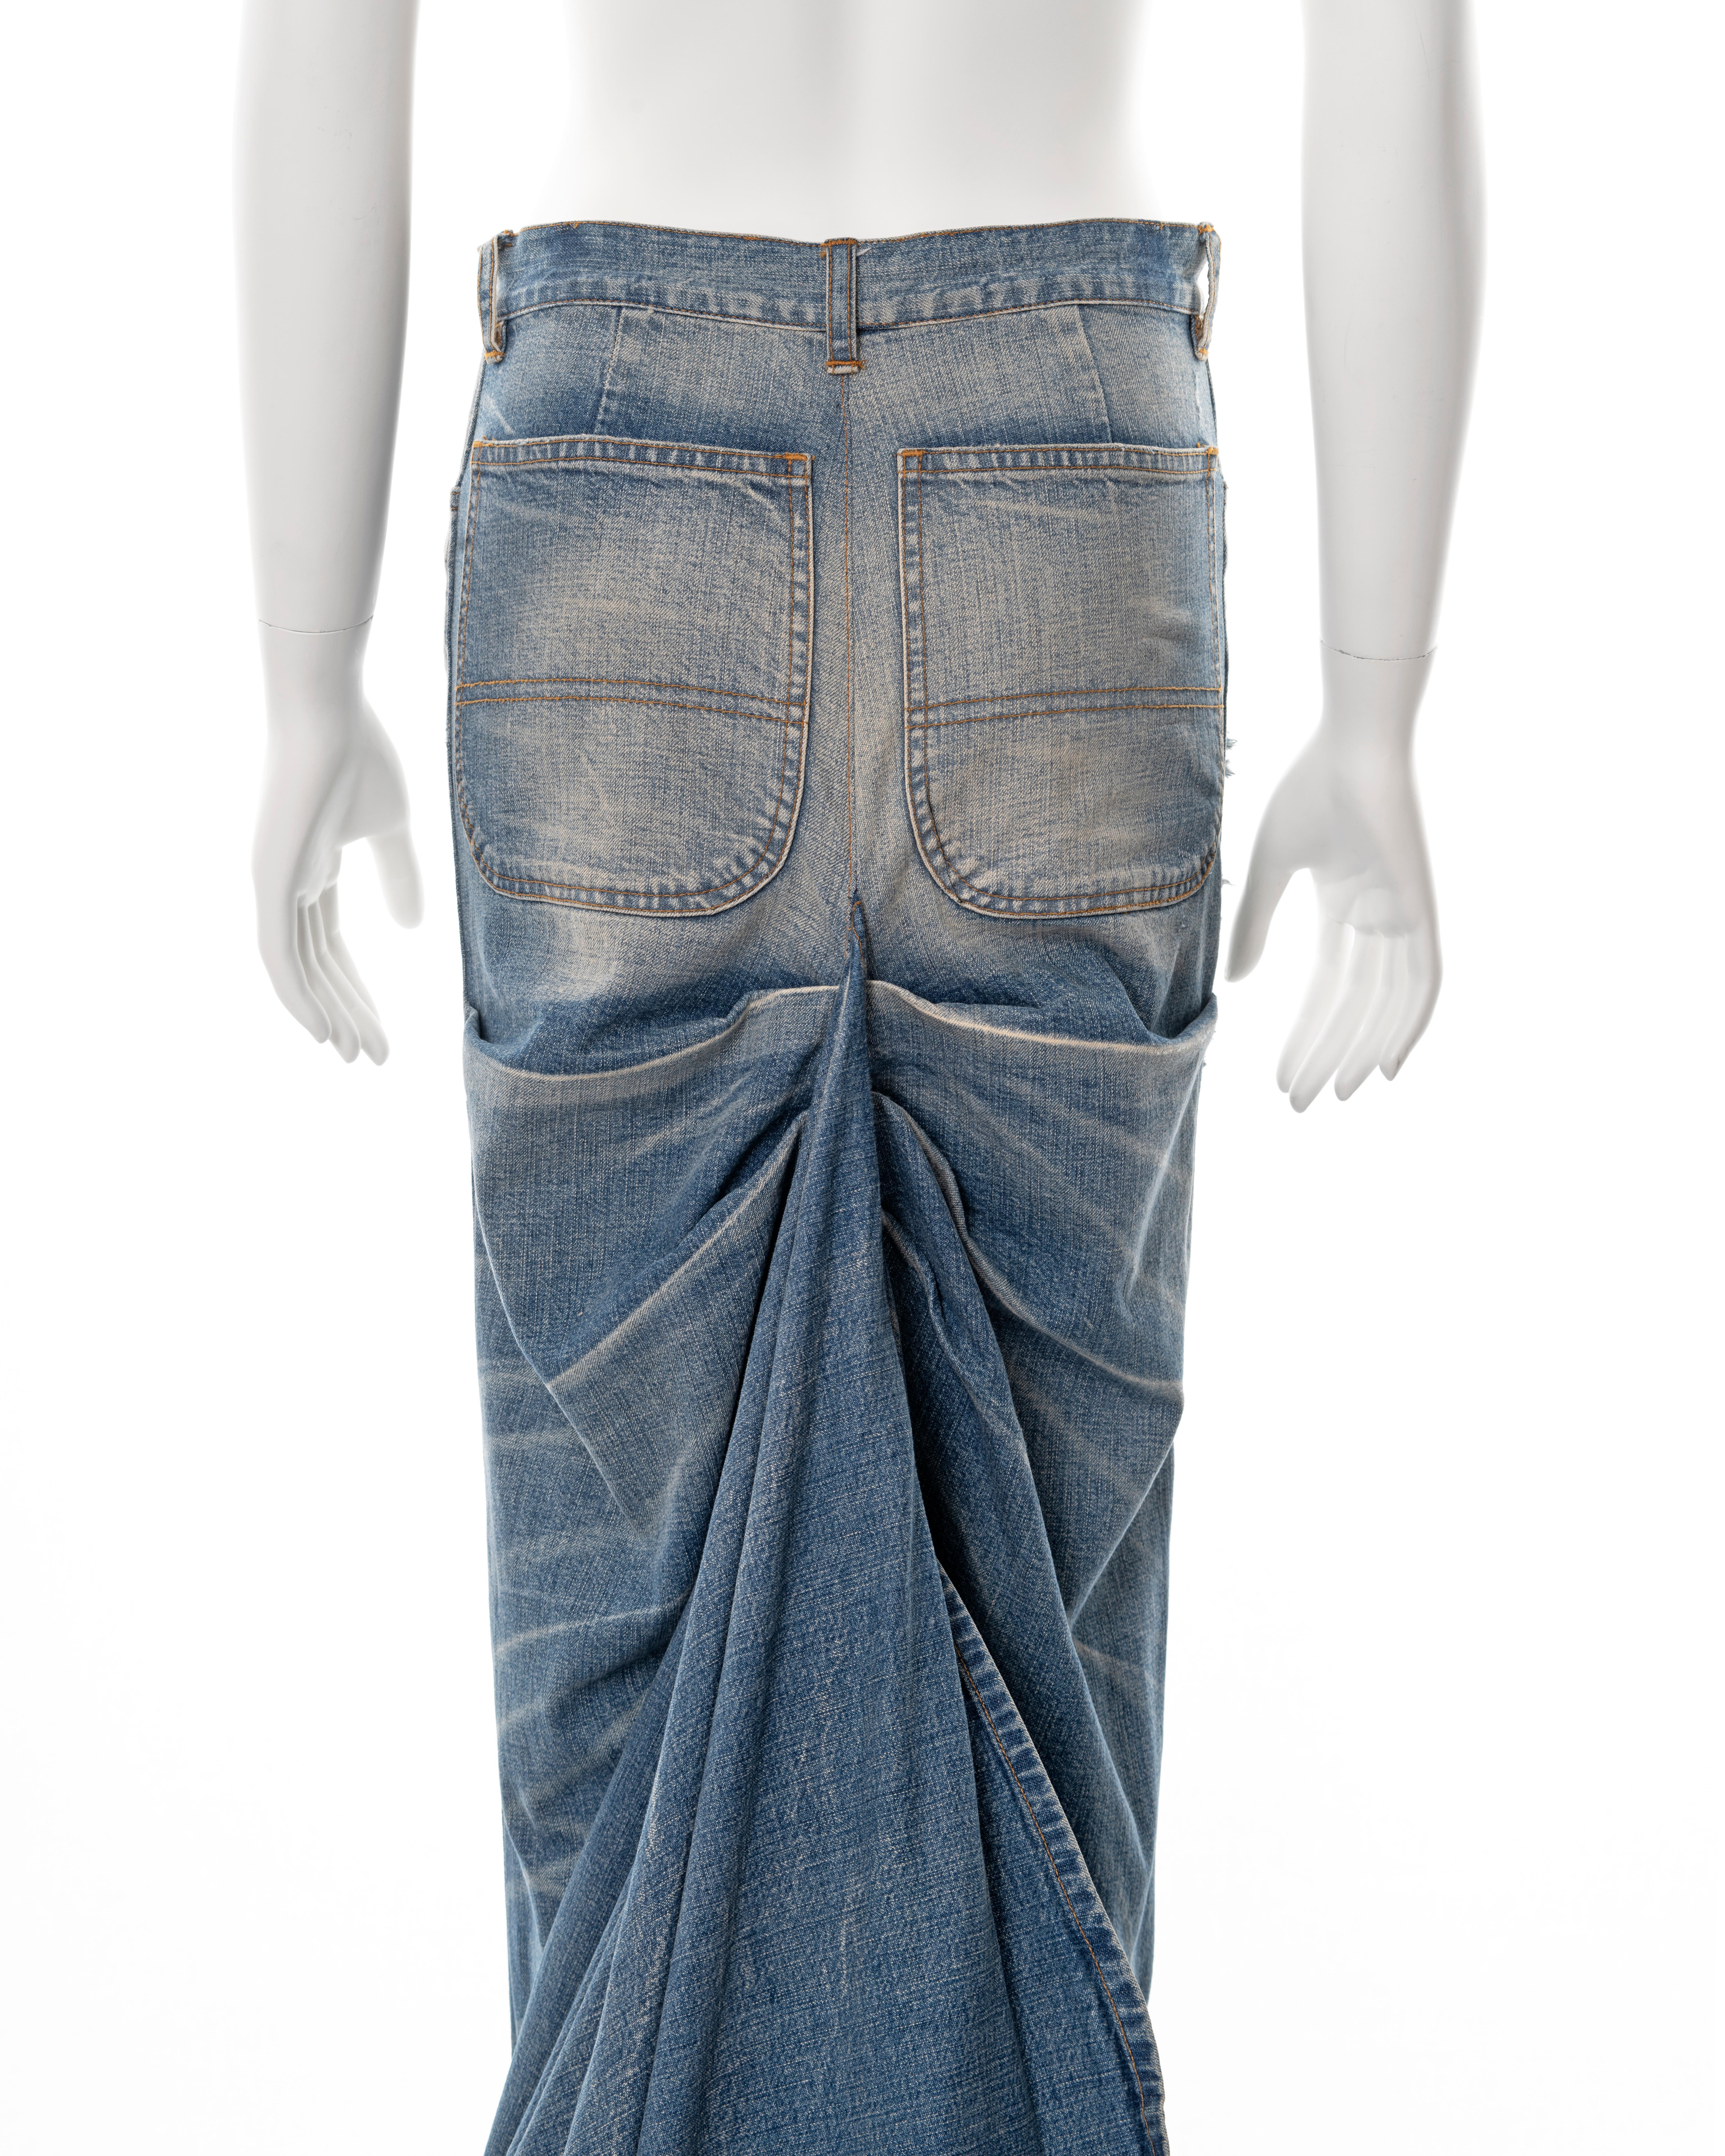 Ralph Lauren sandwashed denim maxi skirt with train, ss 2003 3